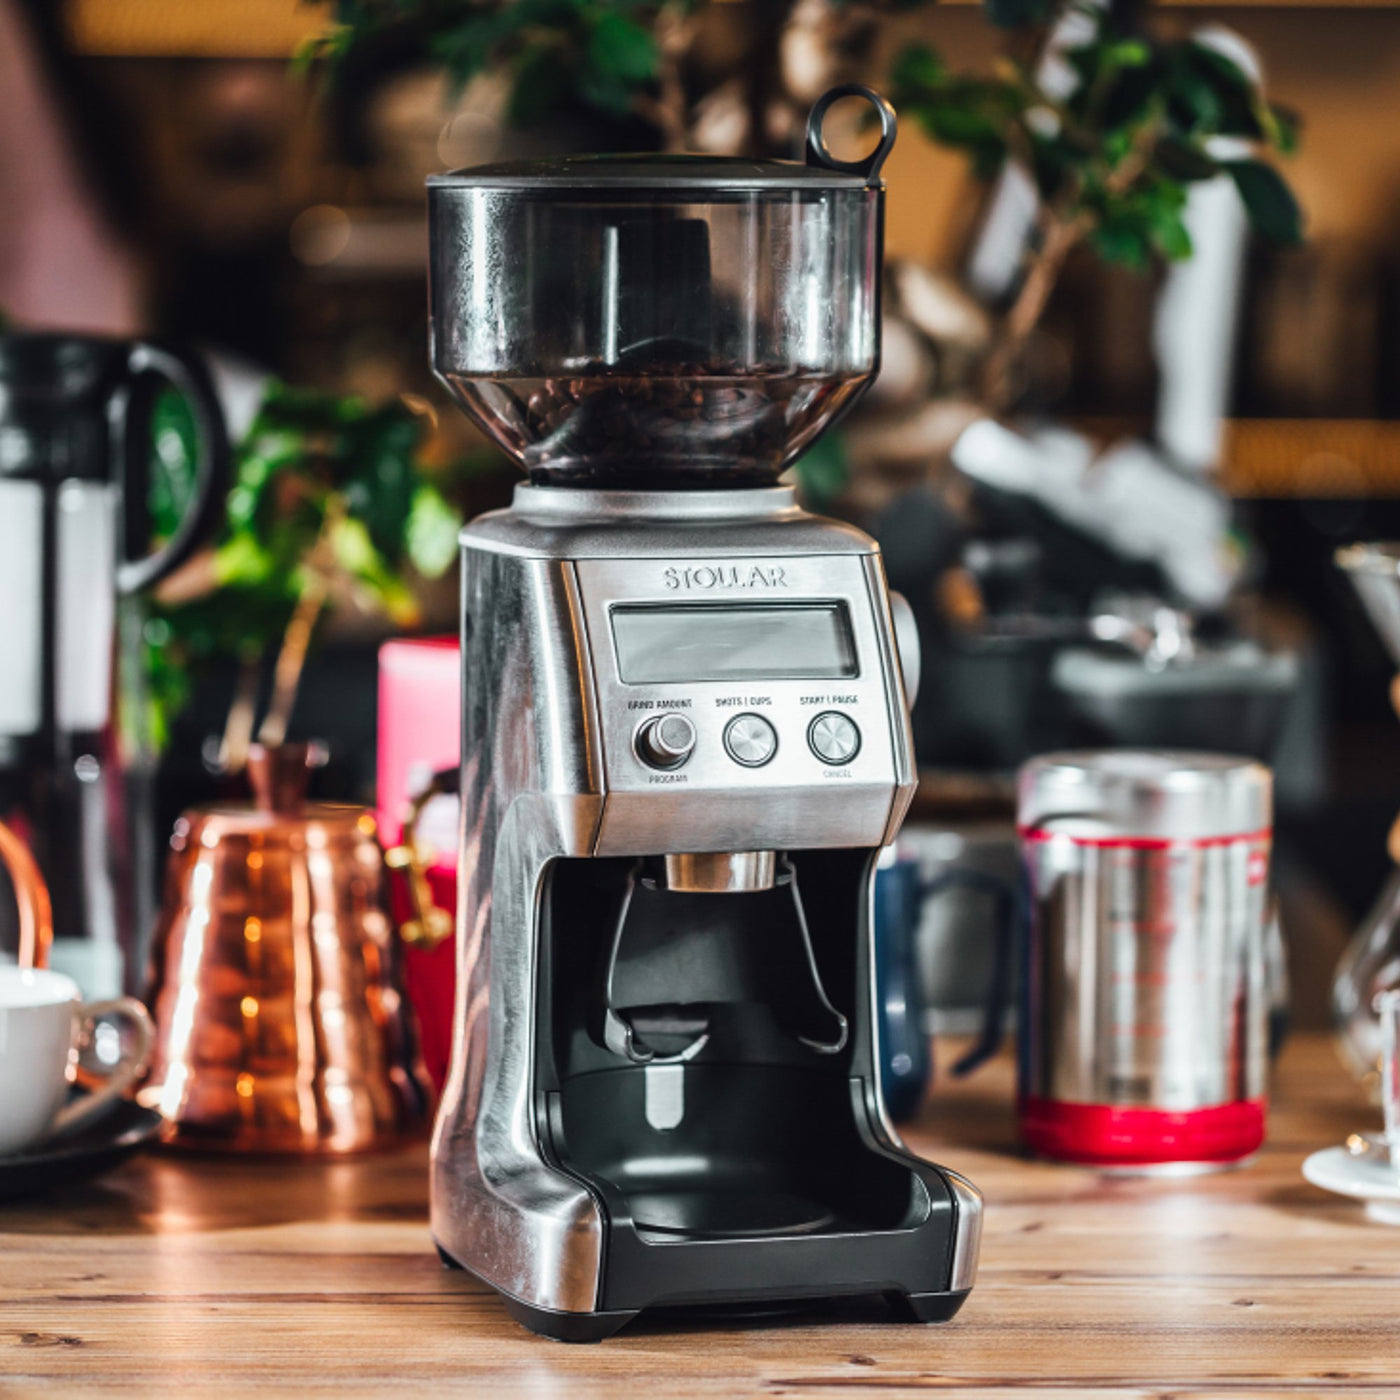 STOLLAR Coffee grinder – I love coffee